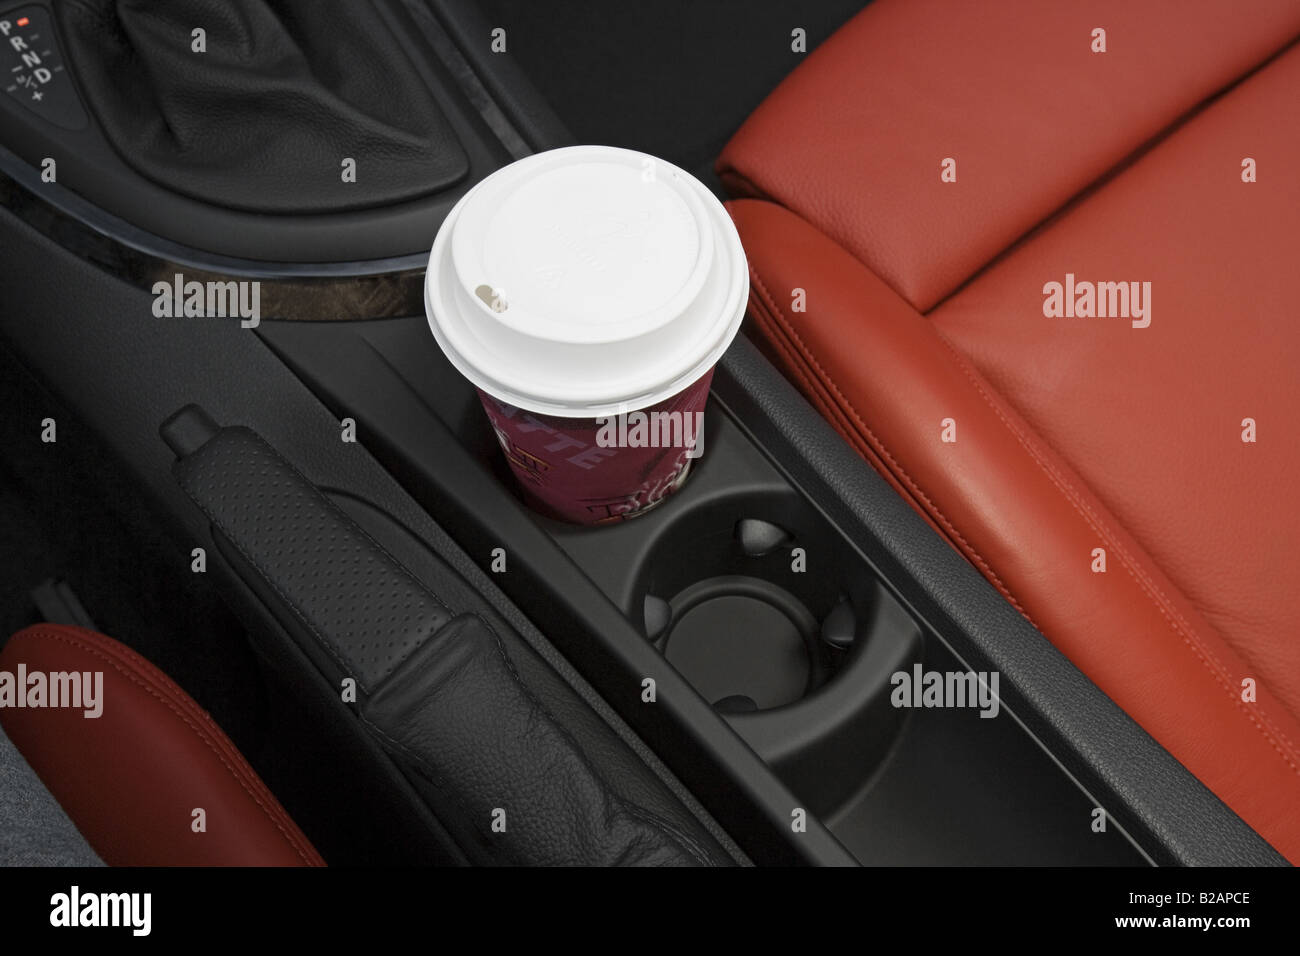 Bmw 135i coupe -Fotos und -Bildmaterial in hoher Auflösung – Alamy